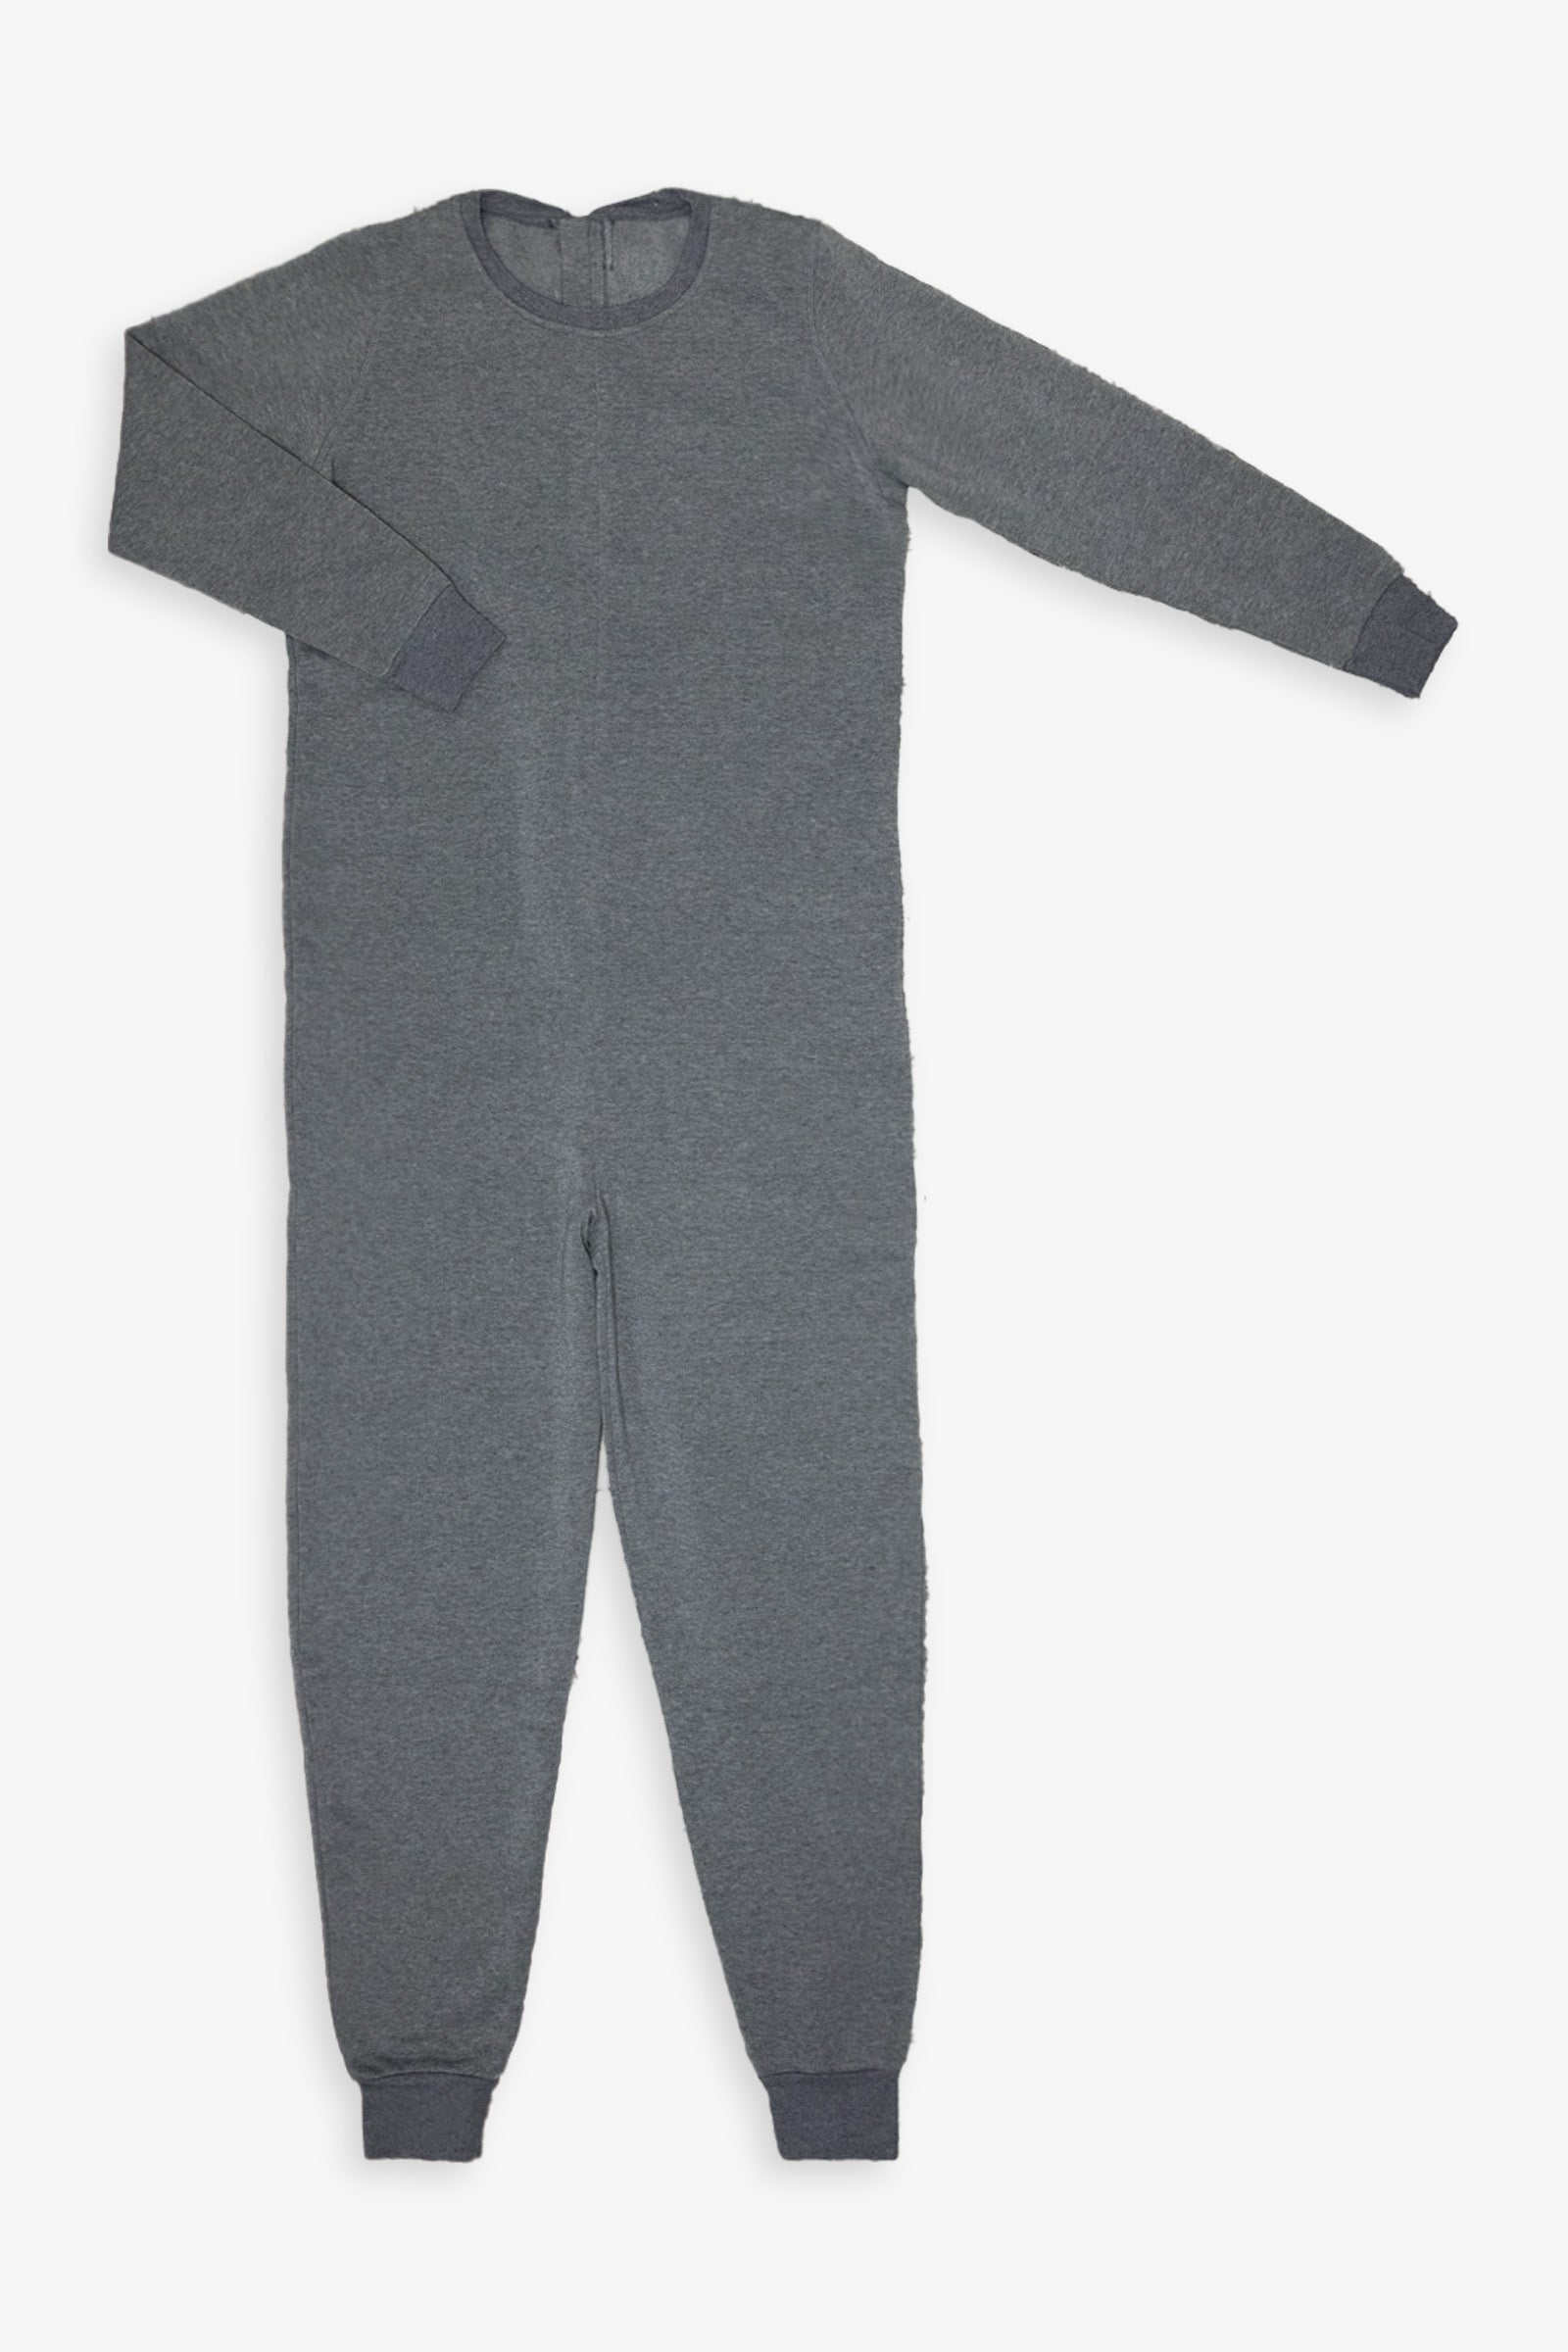 Gertex Adult Adaptive Back-Zip Sleepwear